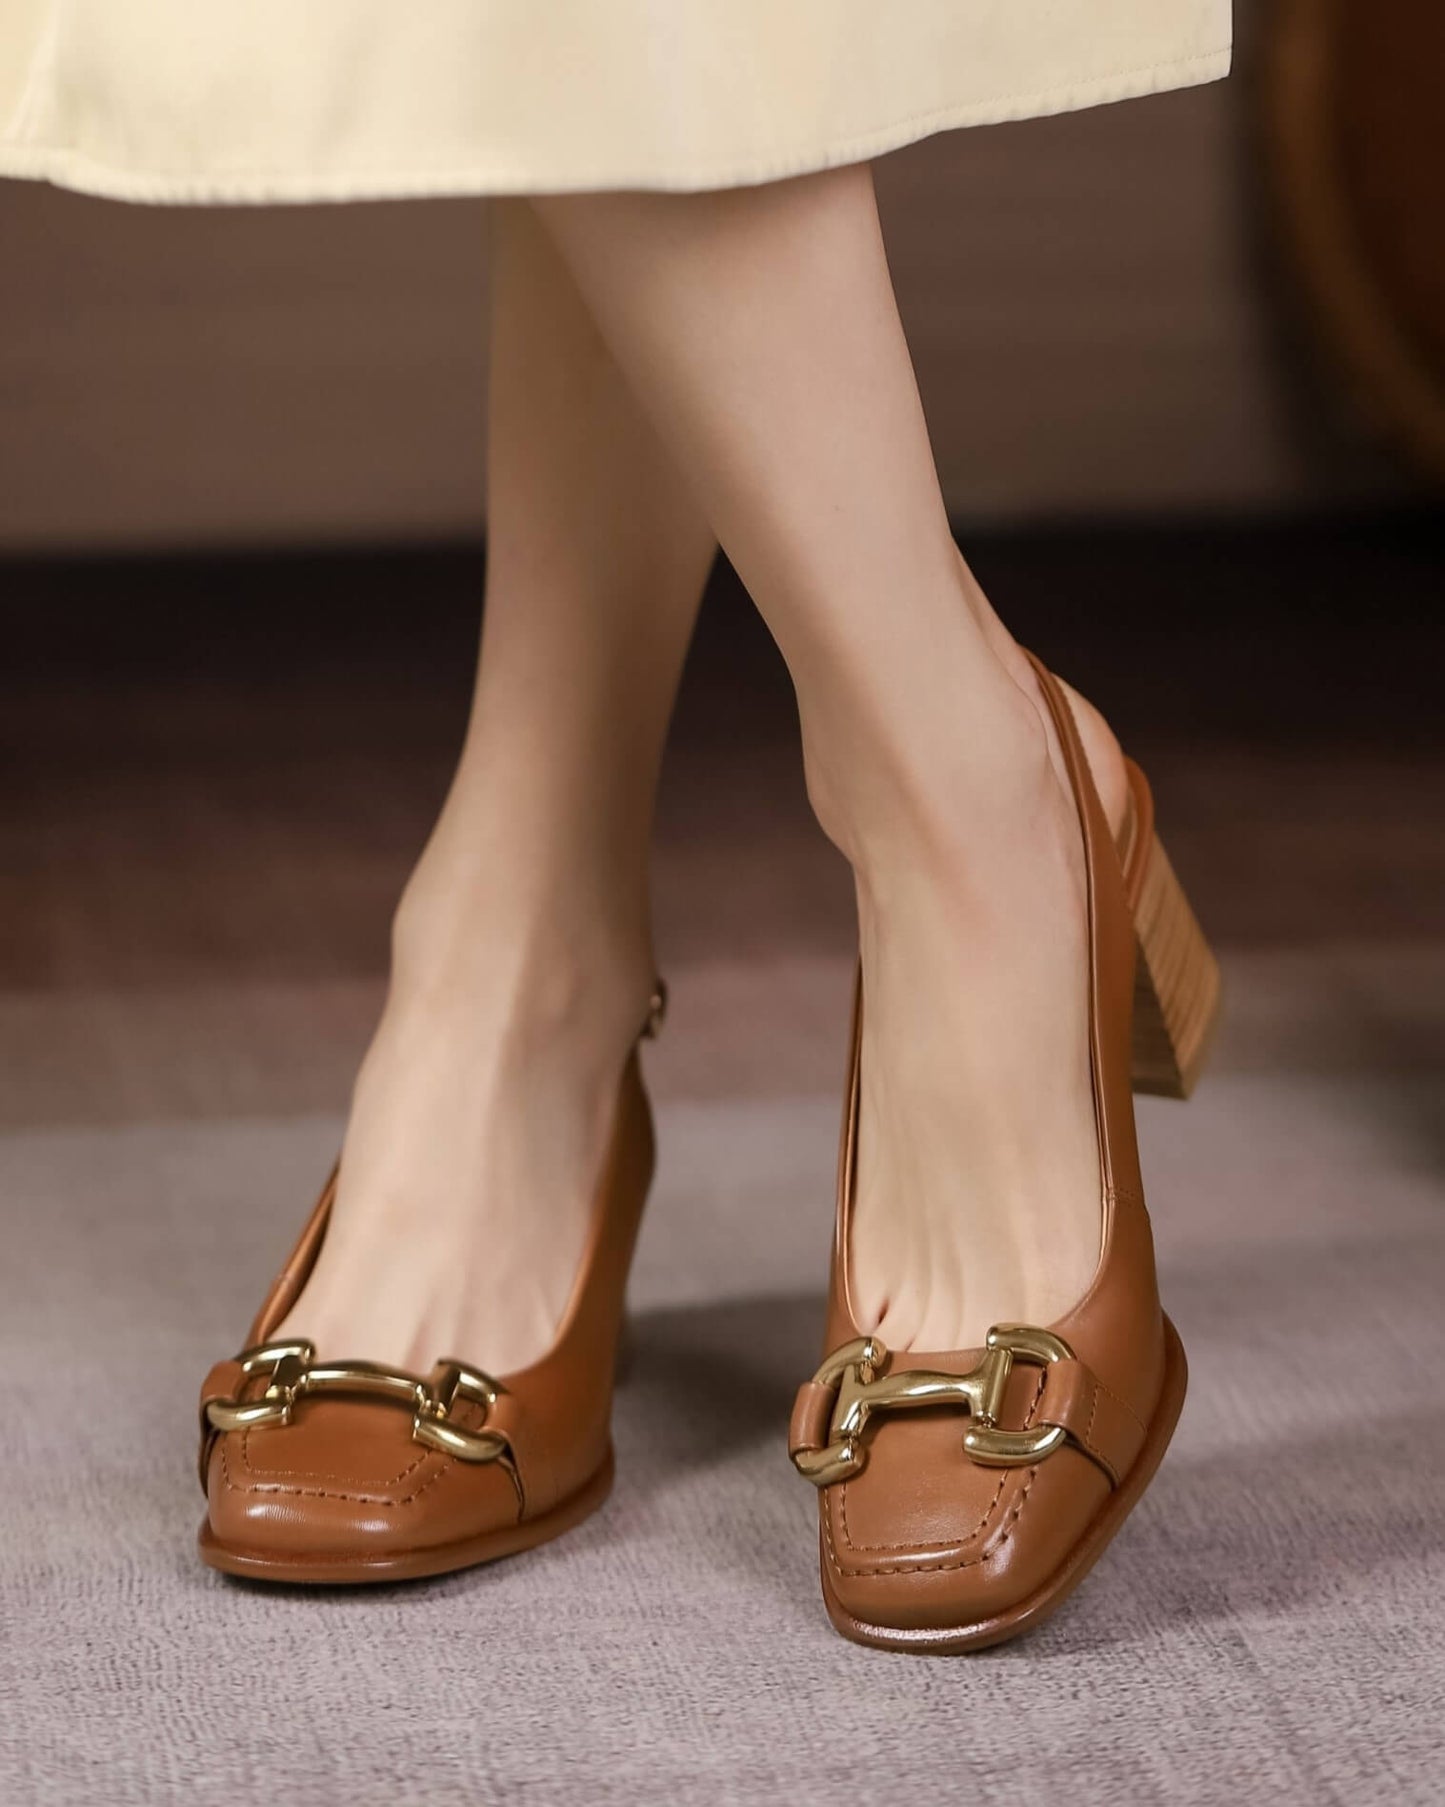 Loa-hardware-slingback-heels-brown-leather-model-c